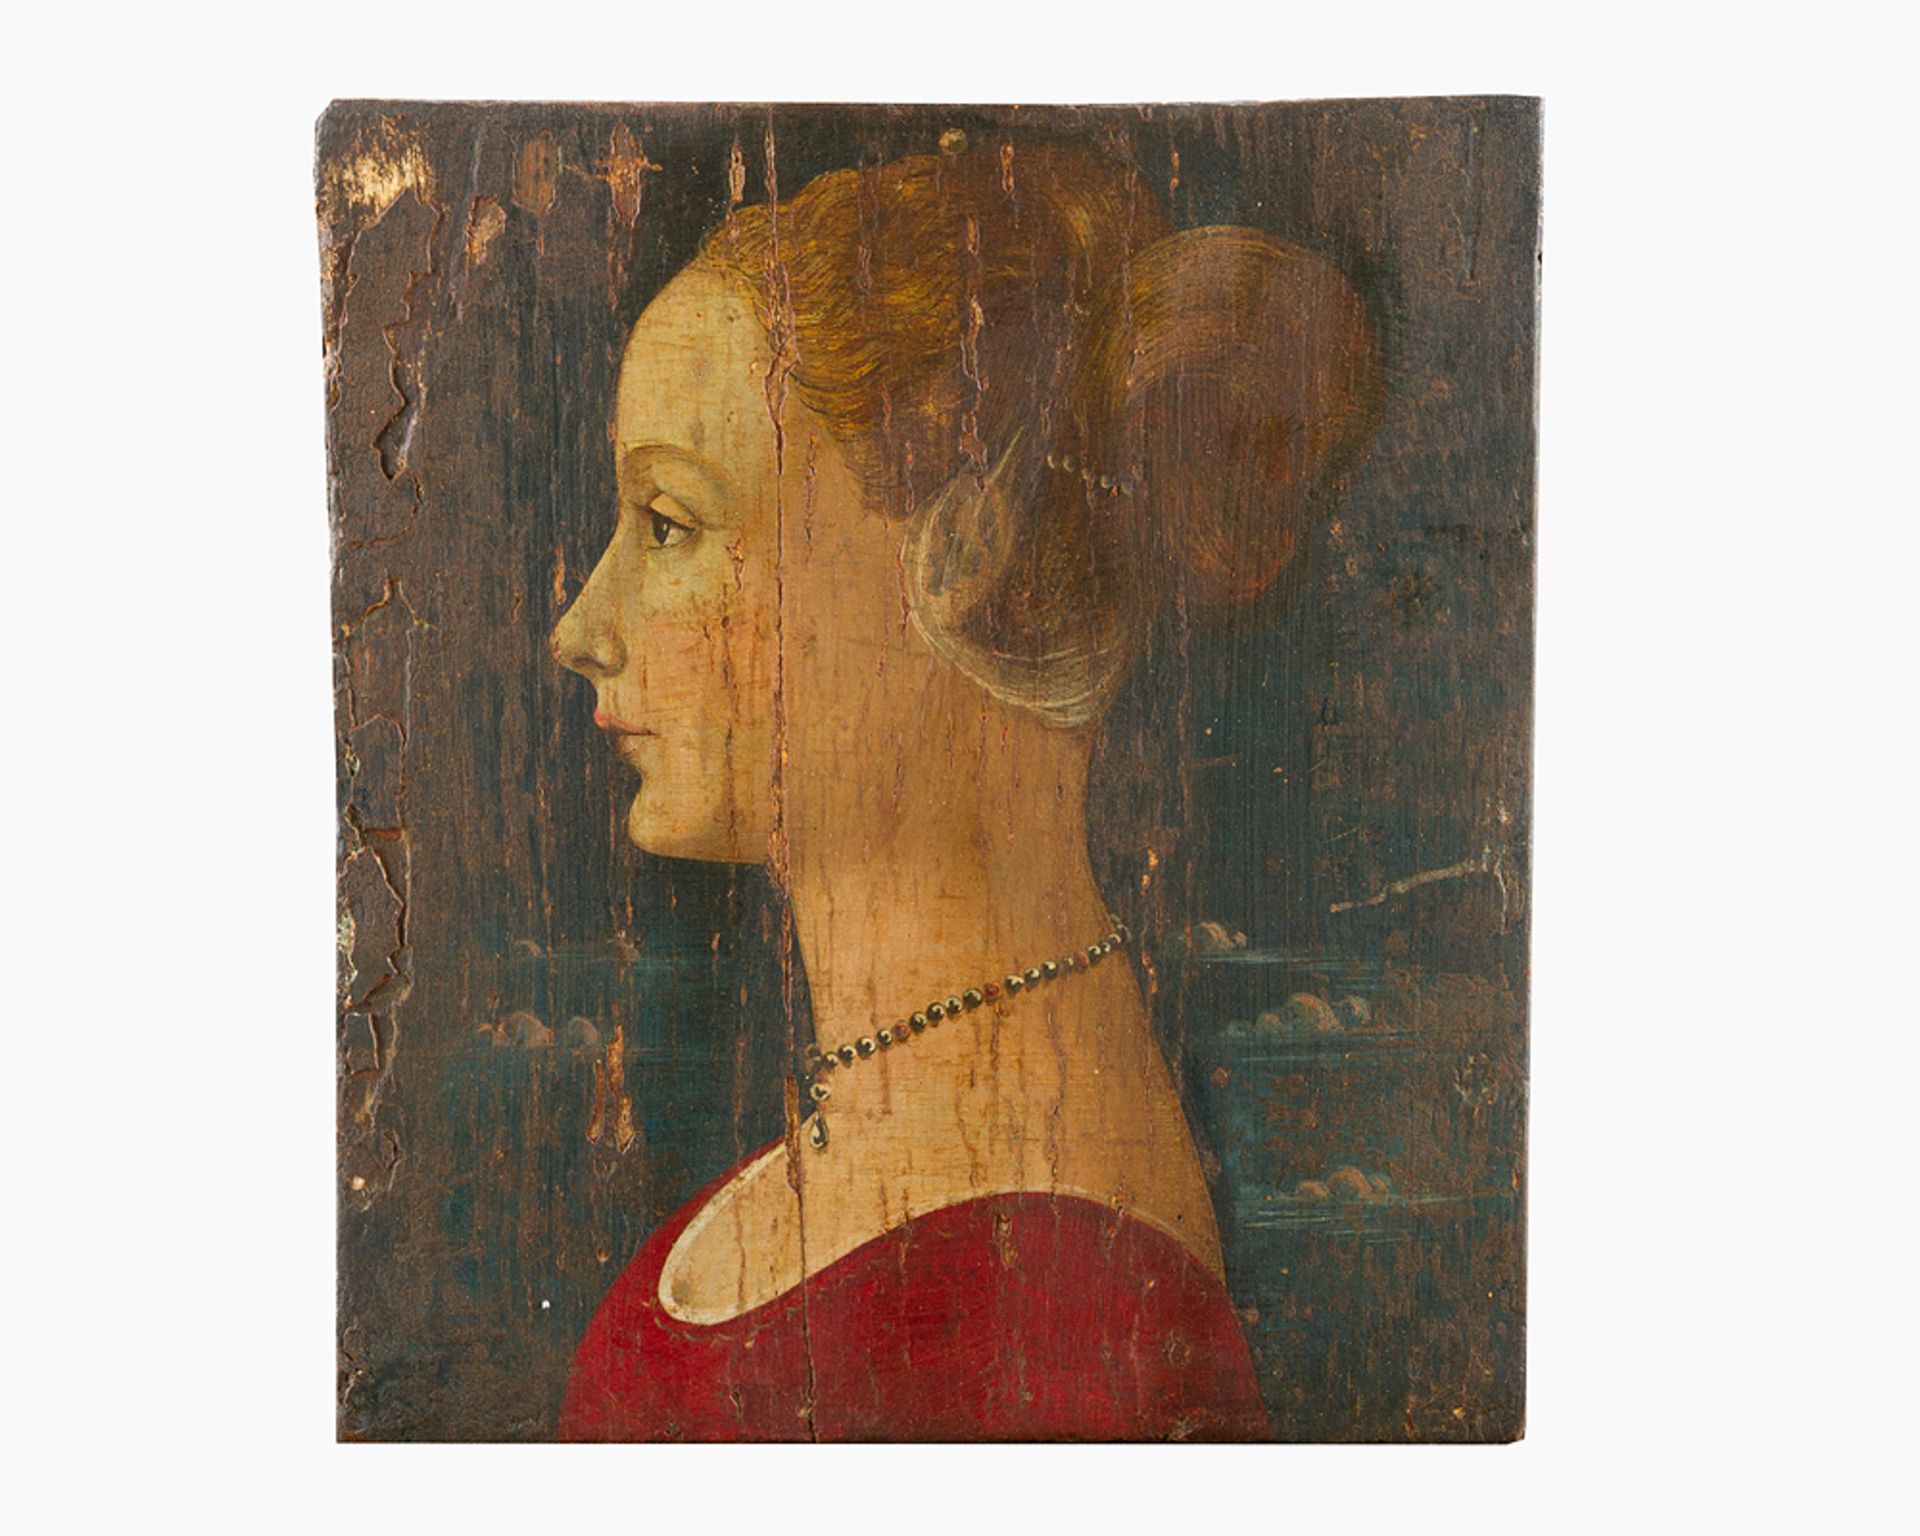 Antonio de Pollaiuolo (1433-1498)-follower, portrait of elegant lady oil on wooden panel , damages